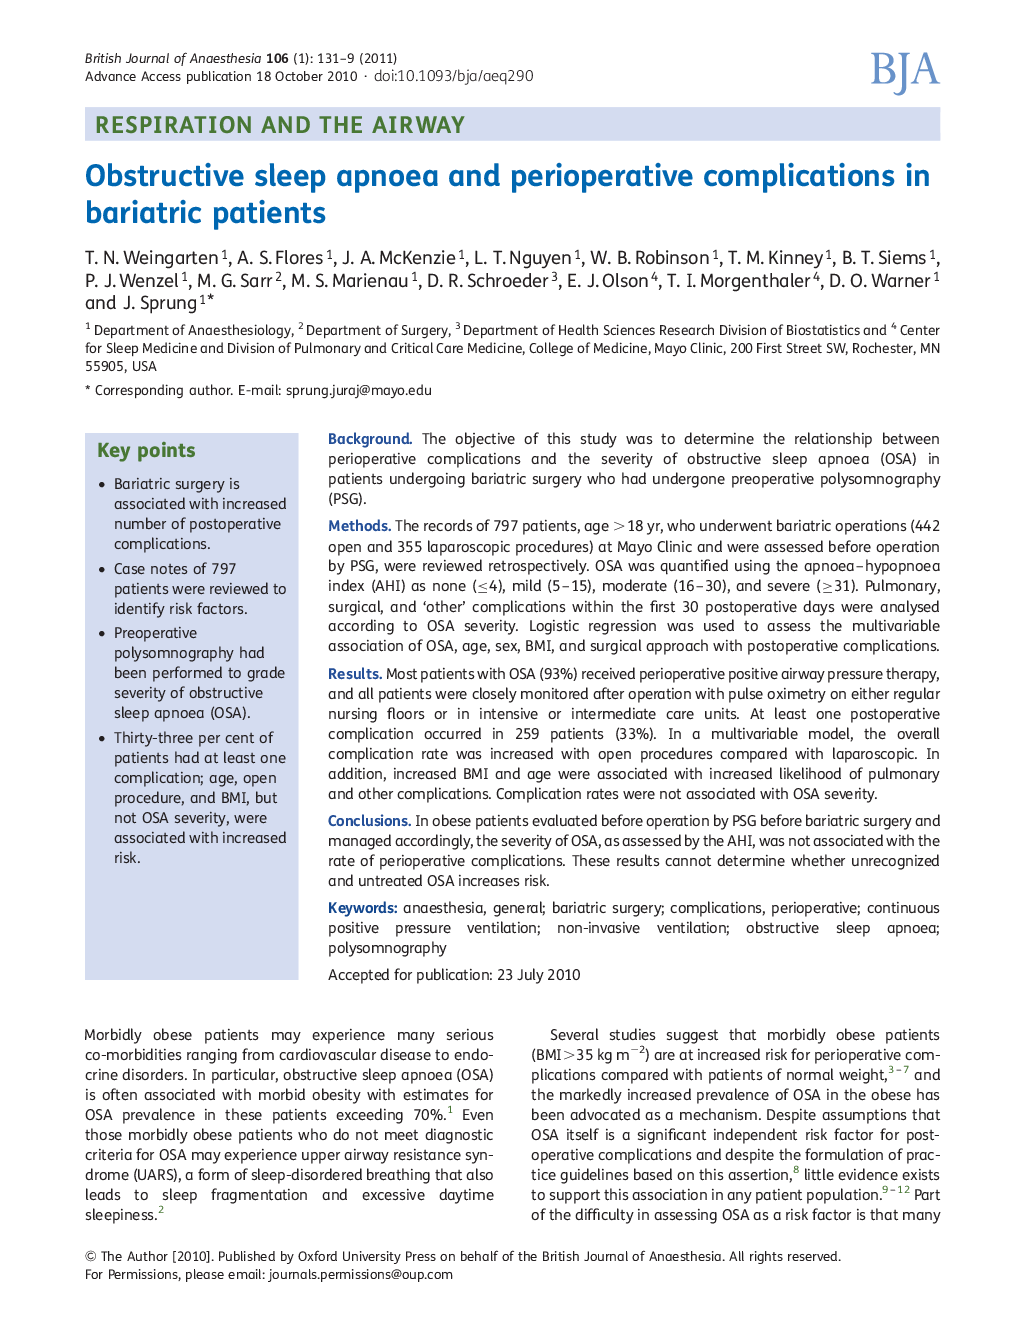 Obstructive sleep apnoea and perioperative complications in bariatric patients